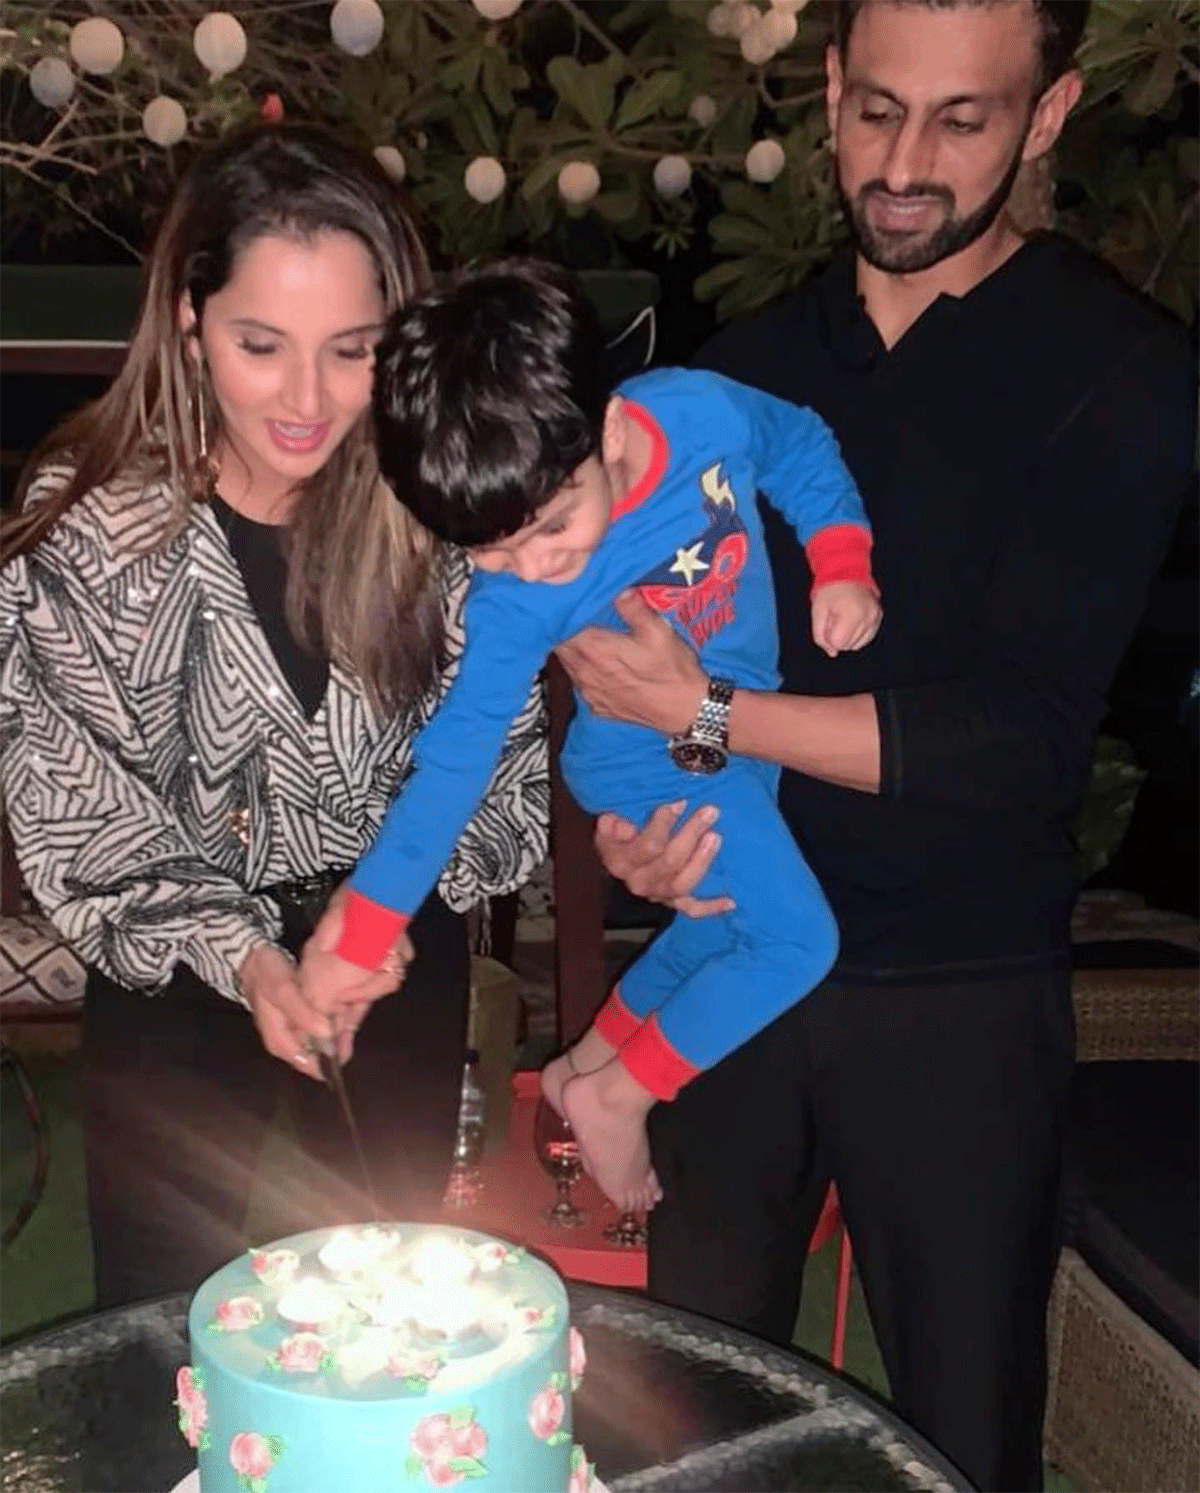 Sania Mirza cuts her birthday cake with son, Izhaan and husband Shoaib Malik